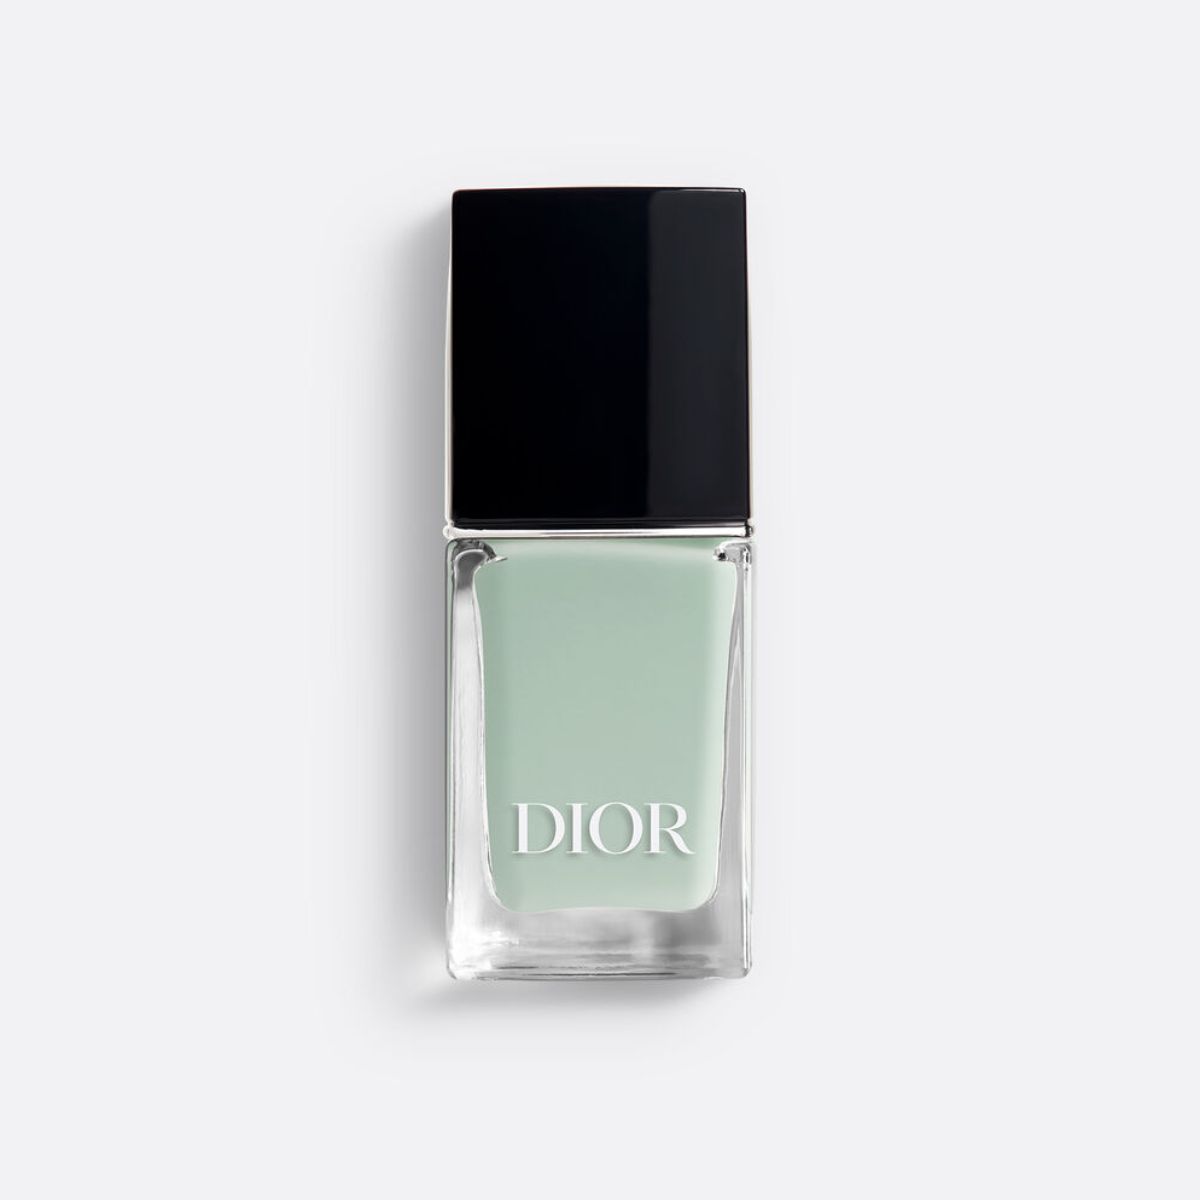 Dior Vernis Nail Polish in Pastel Mint